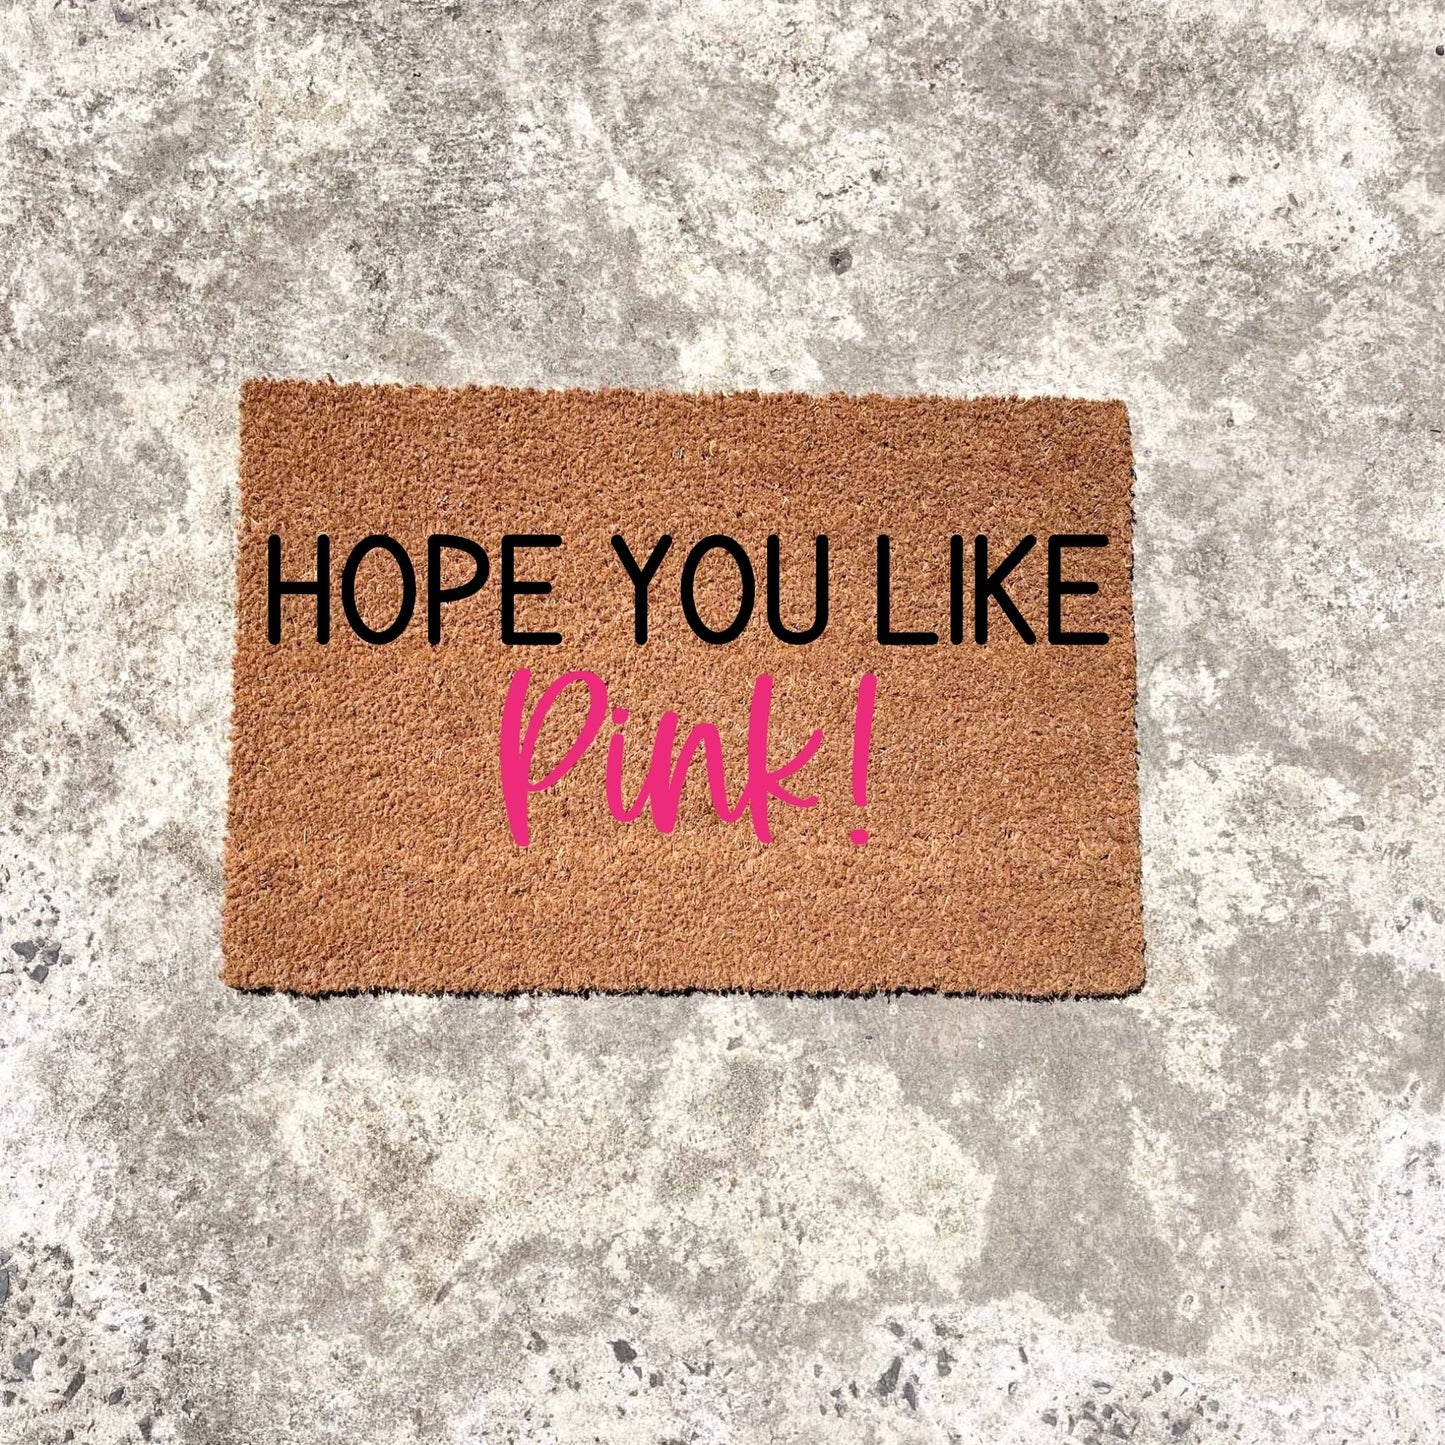 Hope you like pink doormat, cutesy doormat, custom doormat, personalised doormat